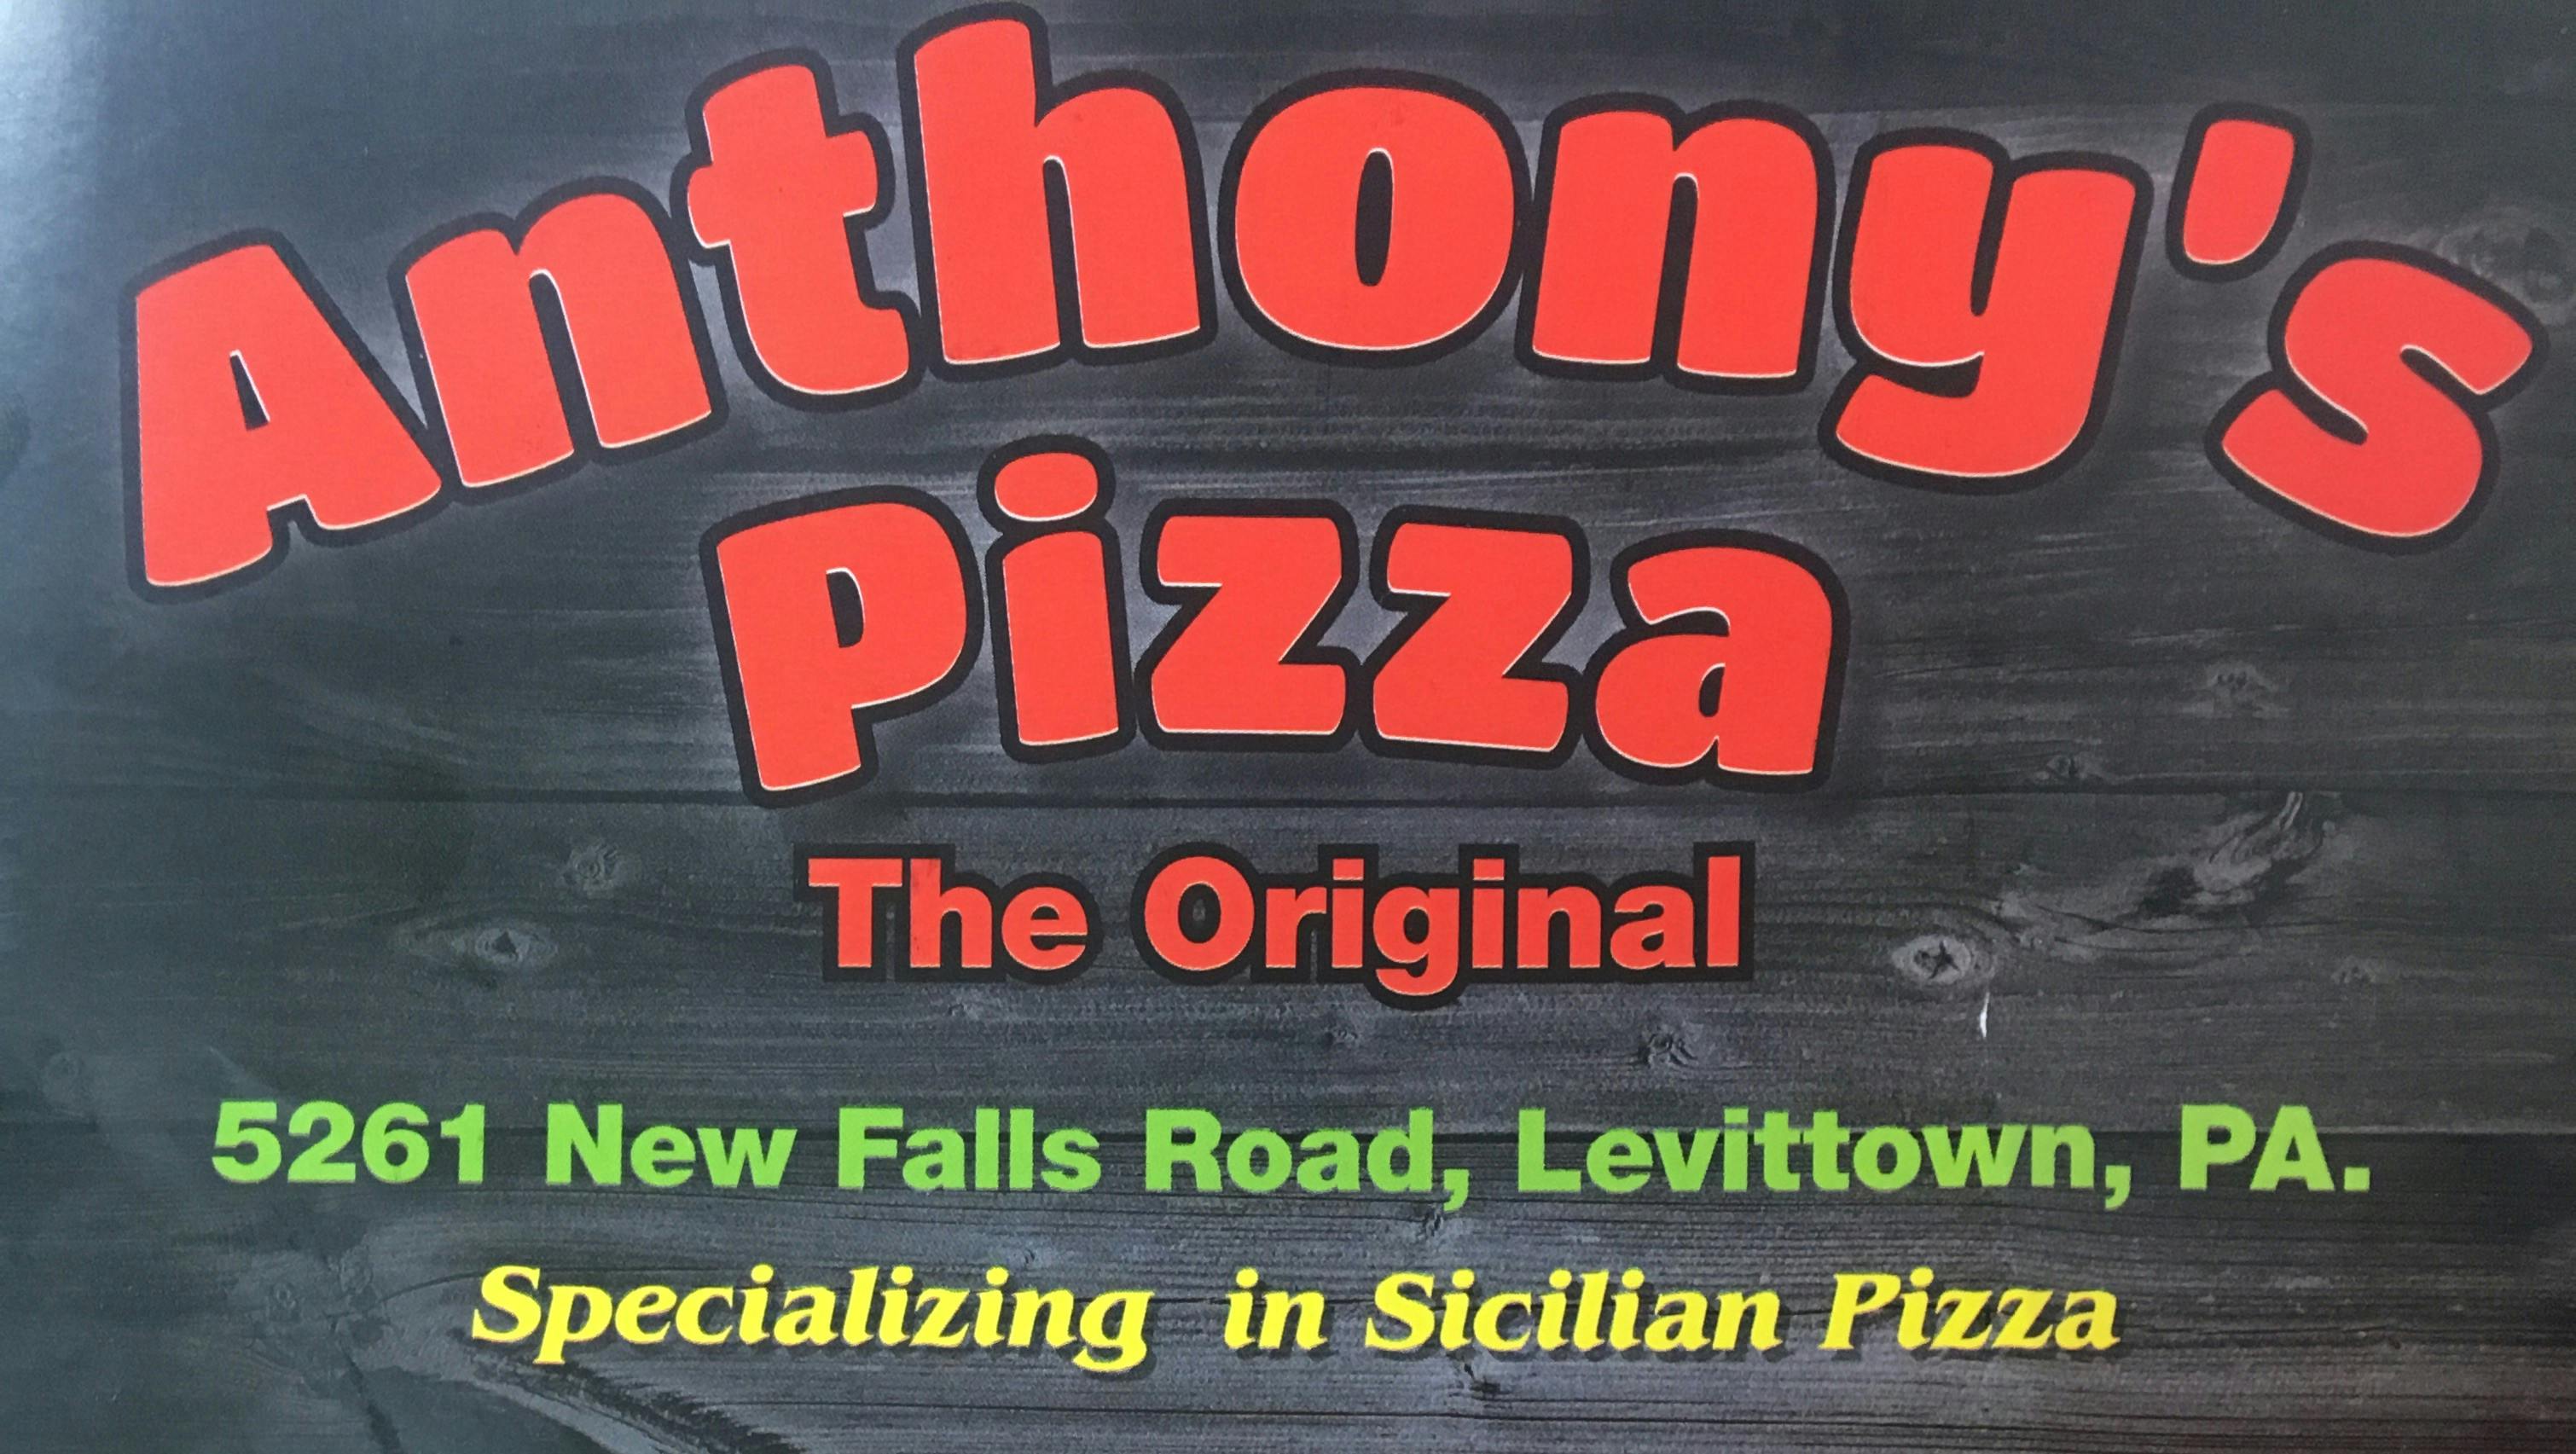 Anthony's Pizza Logo